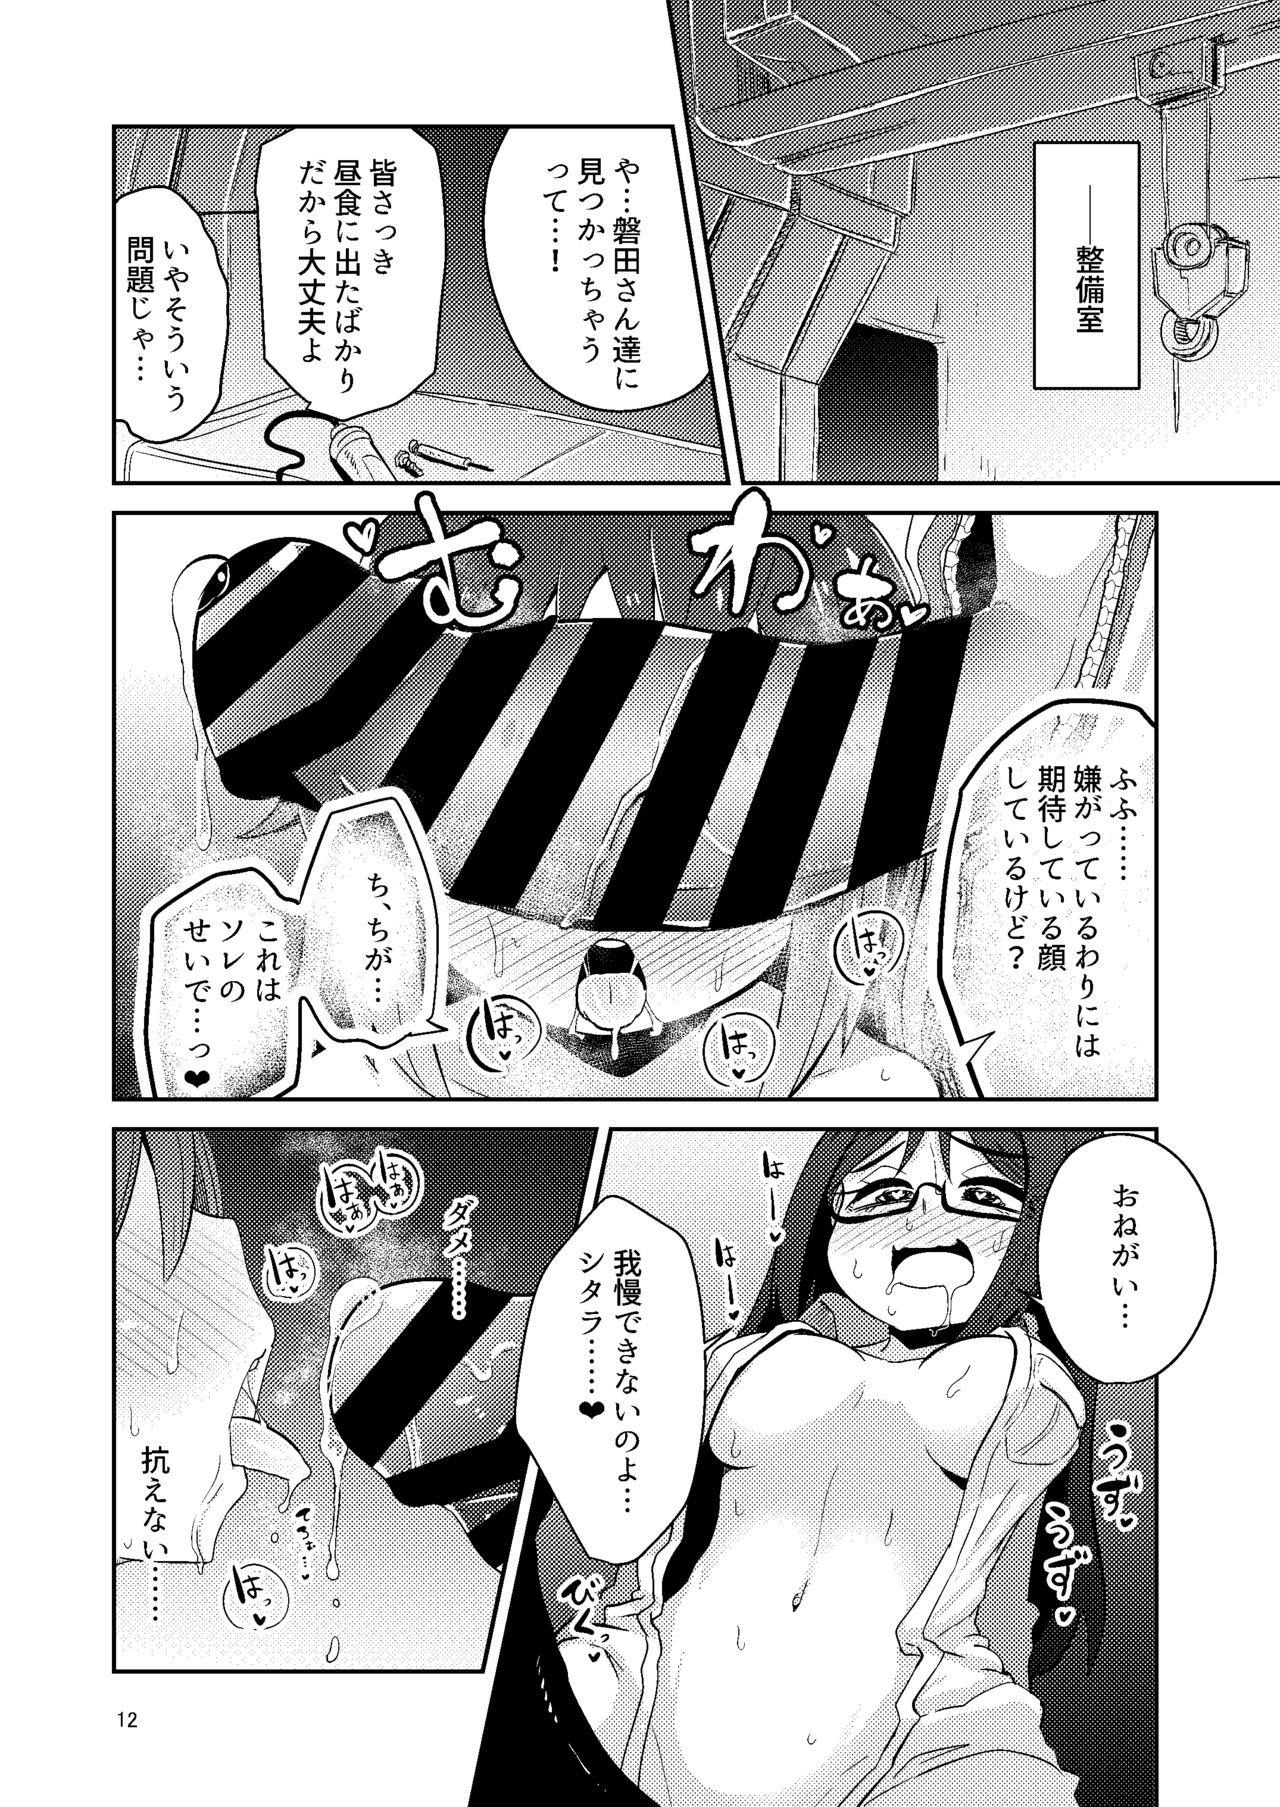 Spreadeagle Fumika no Kokan ni Variant MFs ga Haeta Hanashi 4 Houkai Hen - Alice gear aegis Cdzinha - Page 11